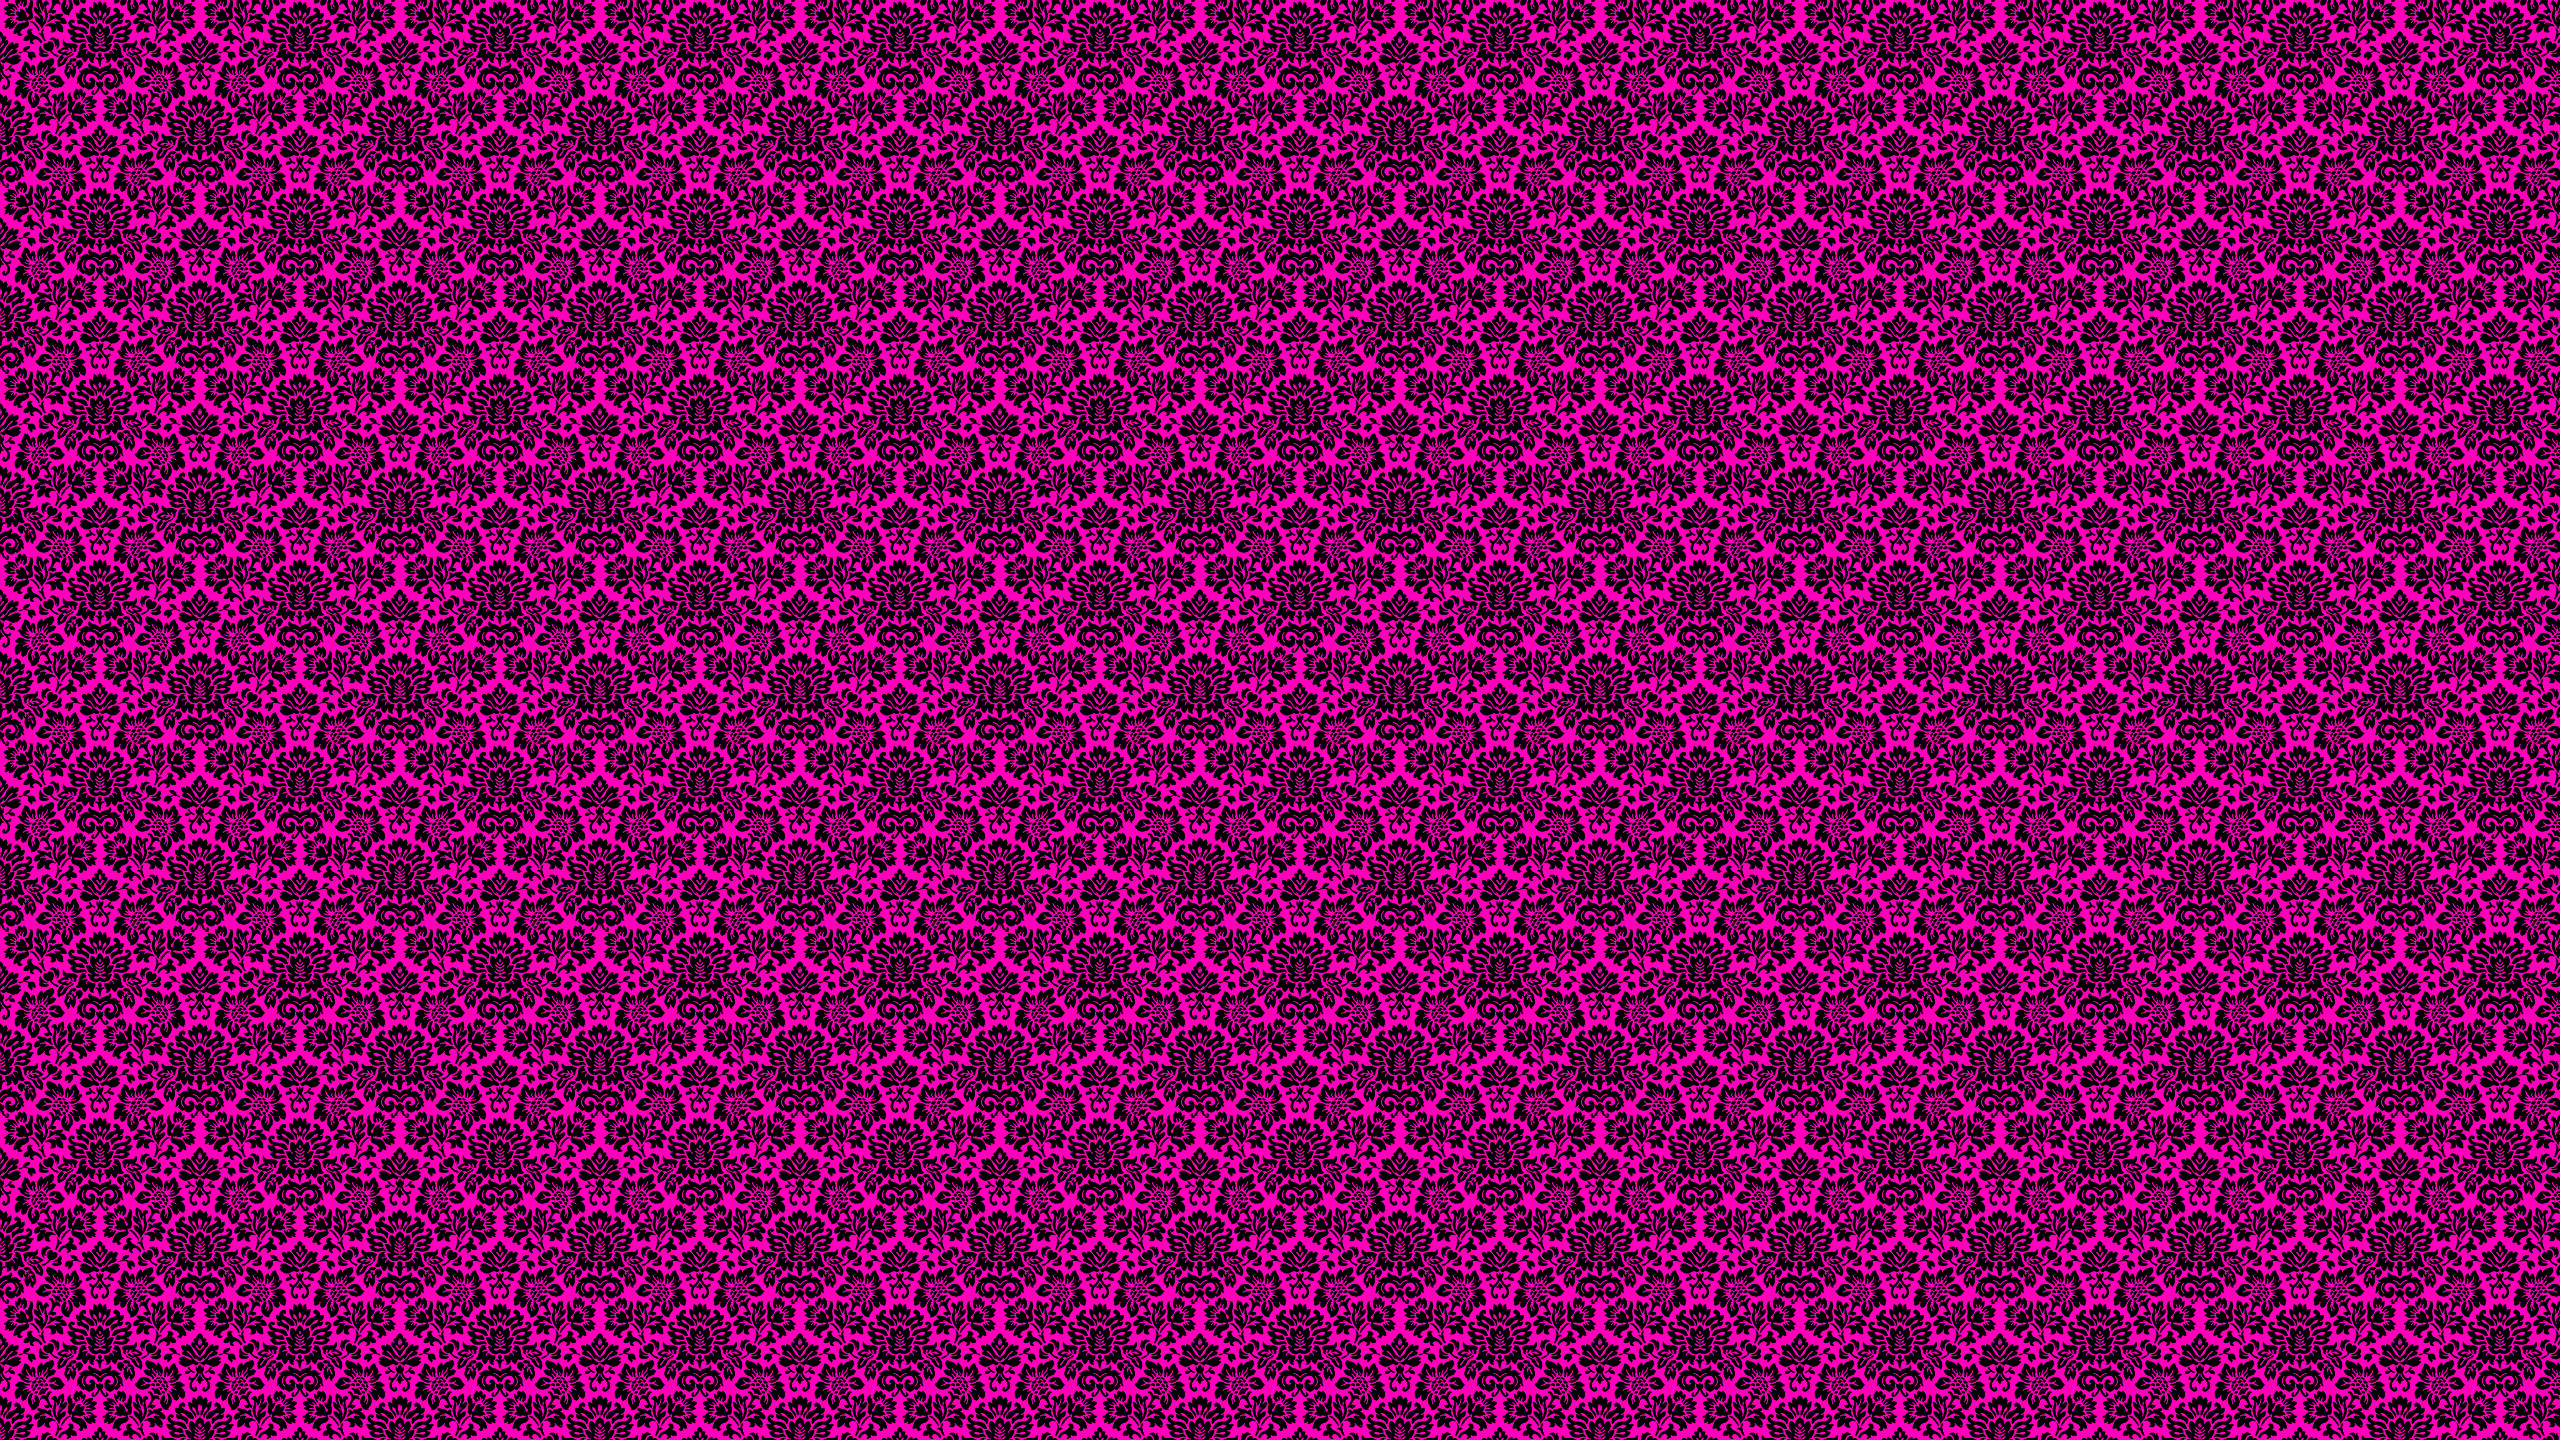 2560x1440 Pink wallpaper